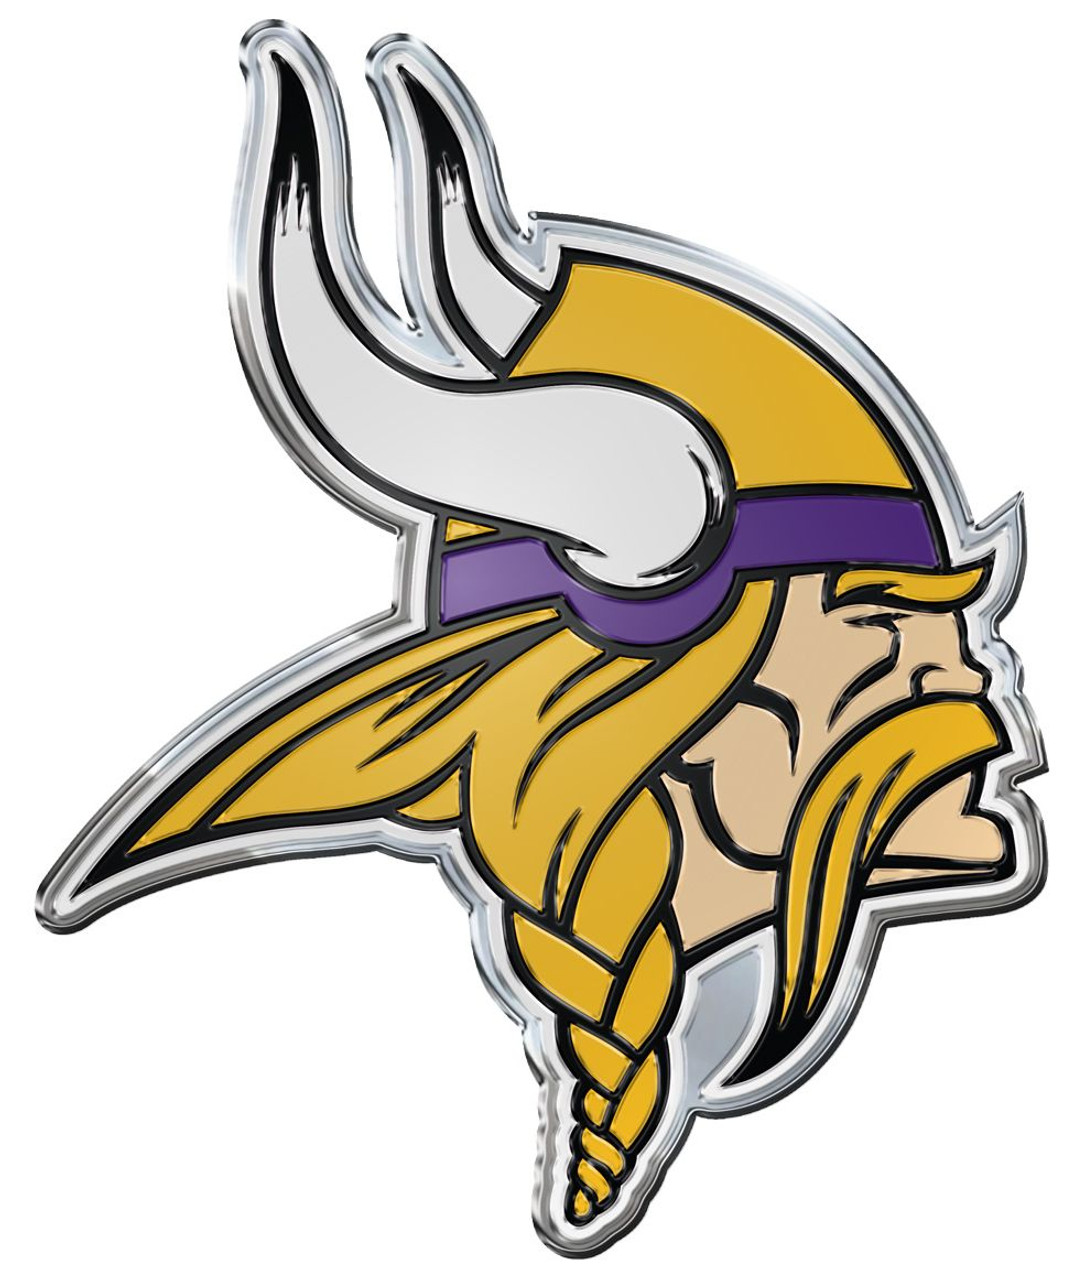 NFL Minnesota Vikings Logo Over Name Embossed TriFold Leather